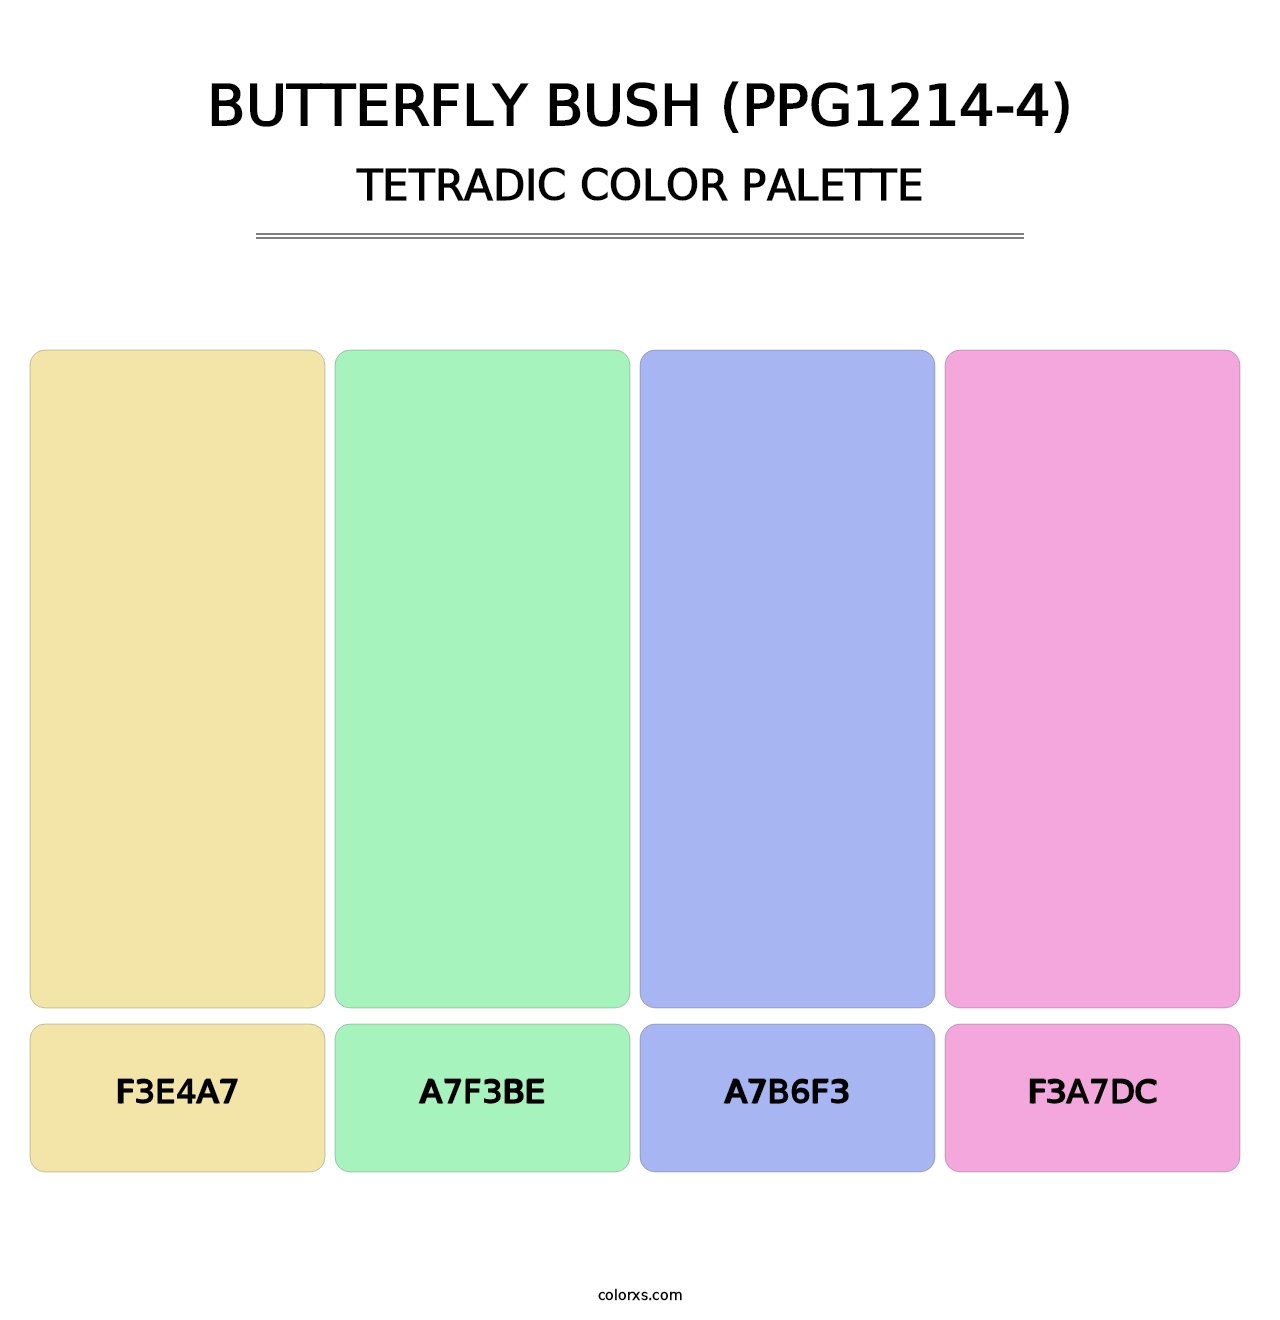 Butterfly Bush (PPG1214-4) - Tetradic Color Palette